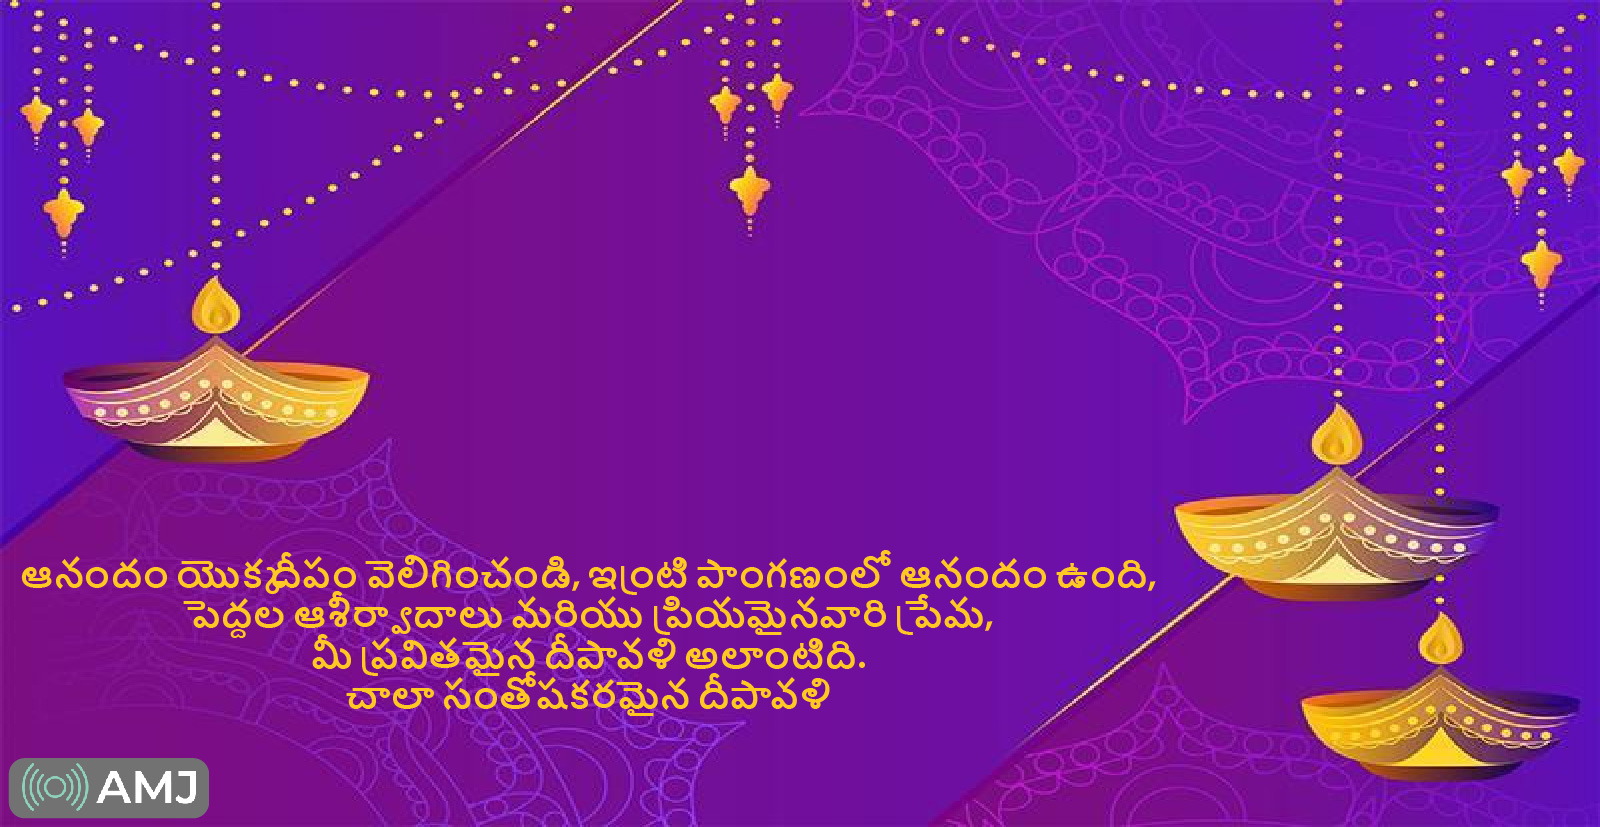 Happy Diwali Messages in Telugu